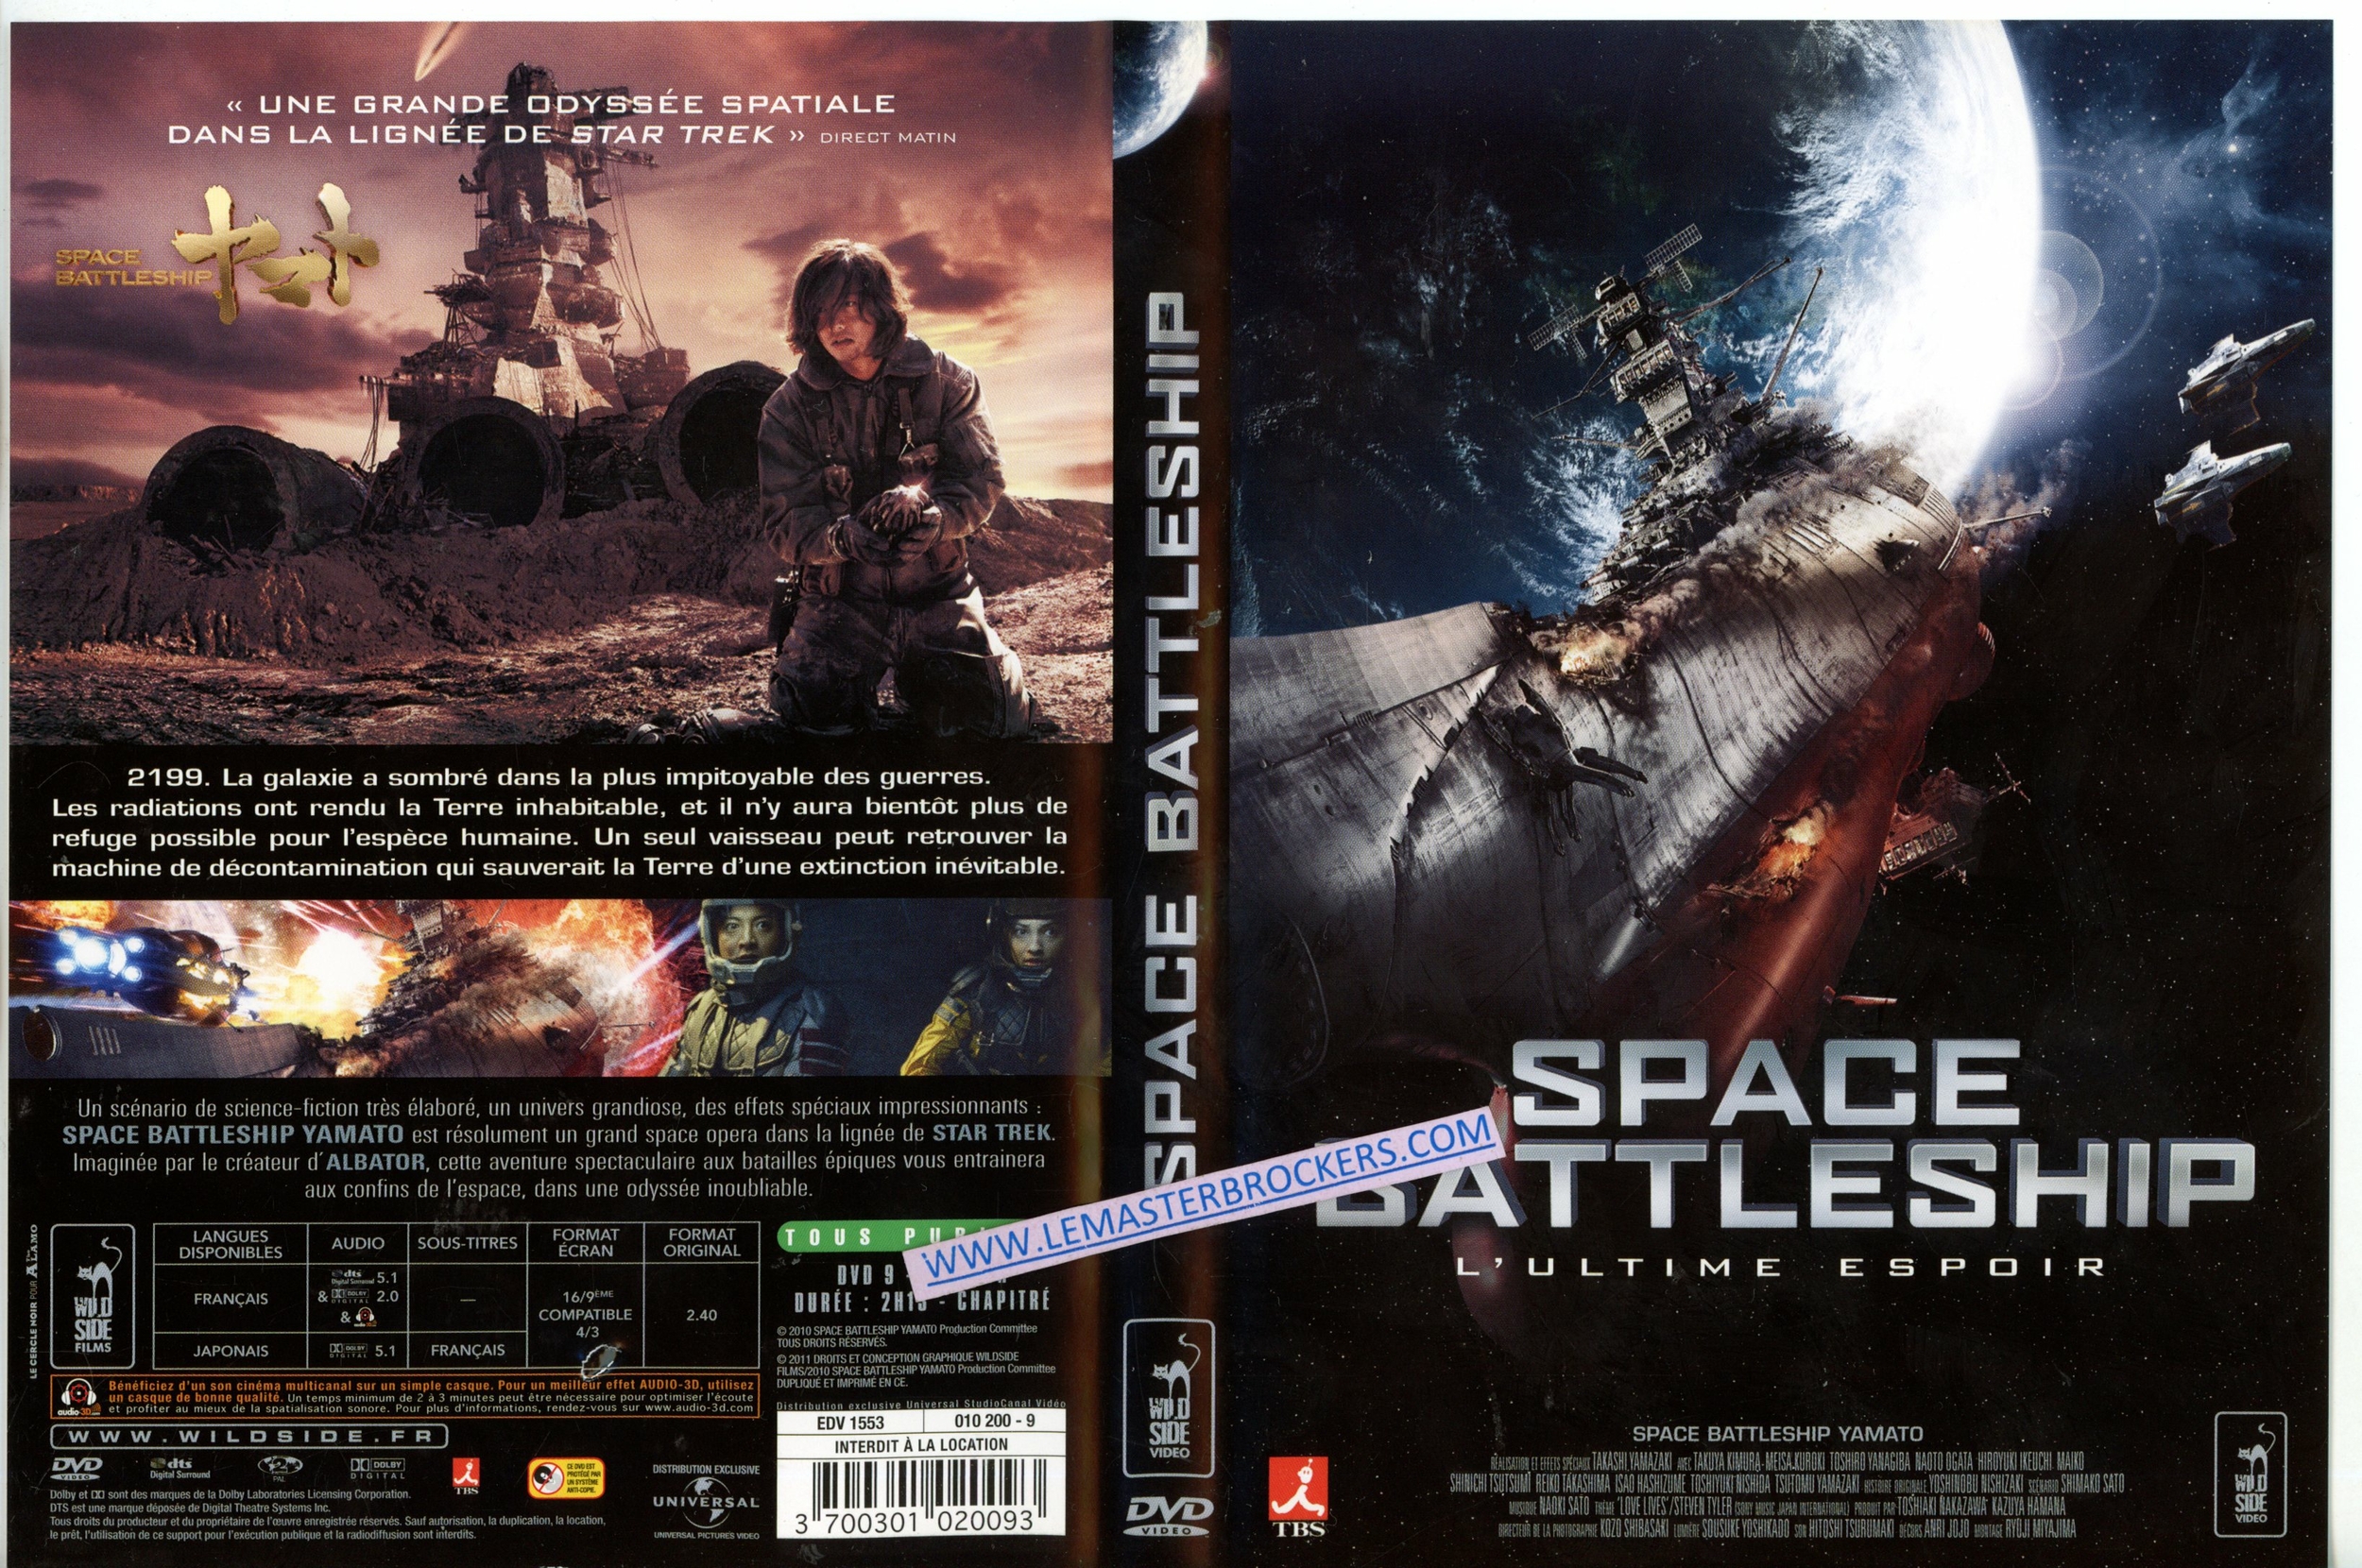 SPACE BATTLESHIP L'ULTIME ESPOIRE - DVD - 3700301020093